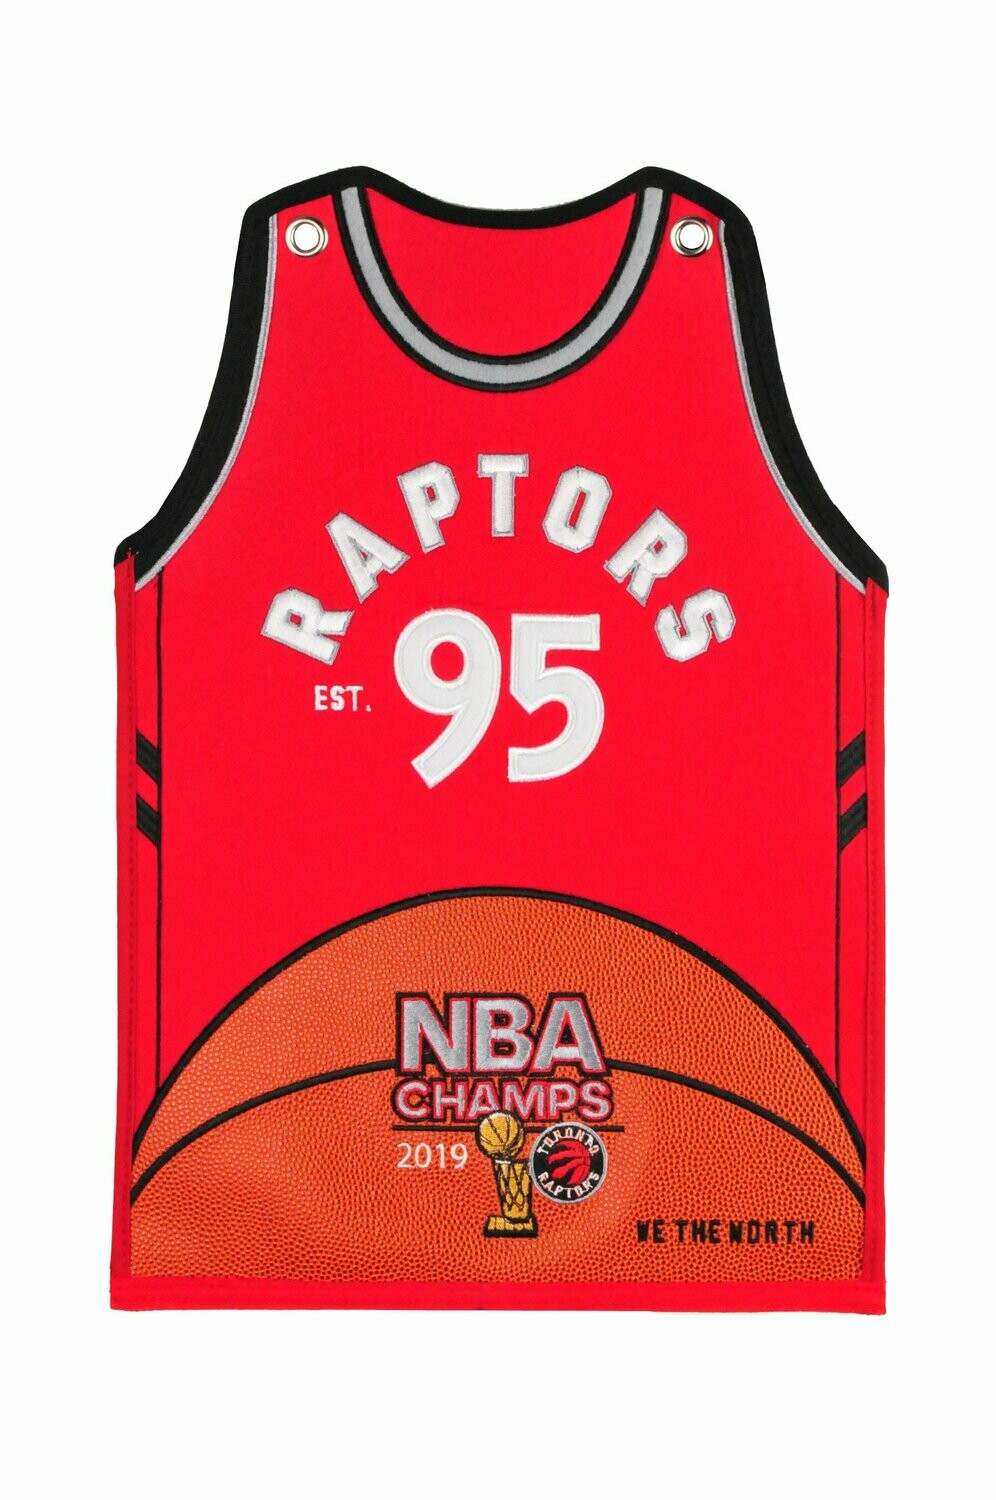 2019 NBA Champs Toronto Raptors Jersey 